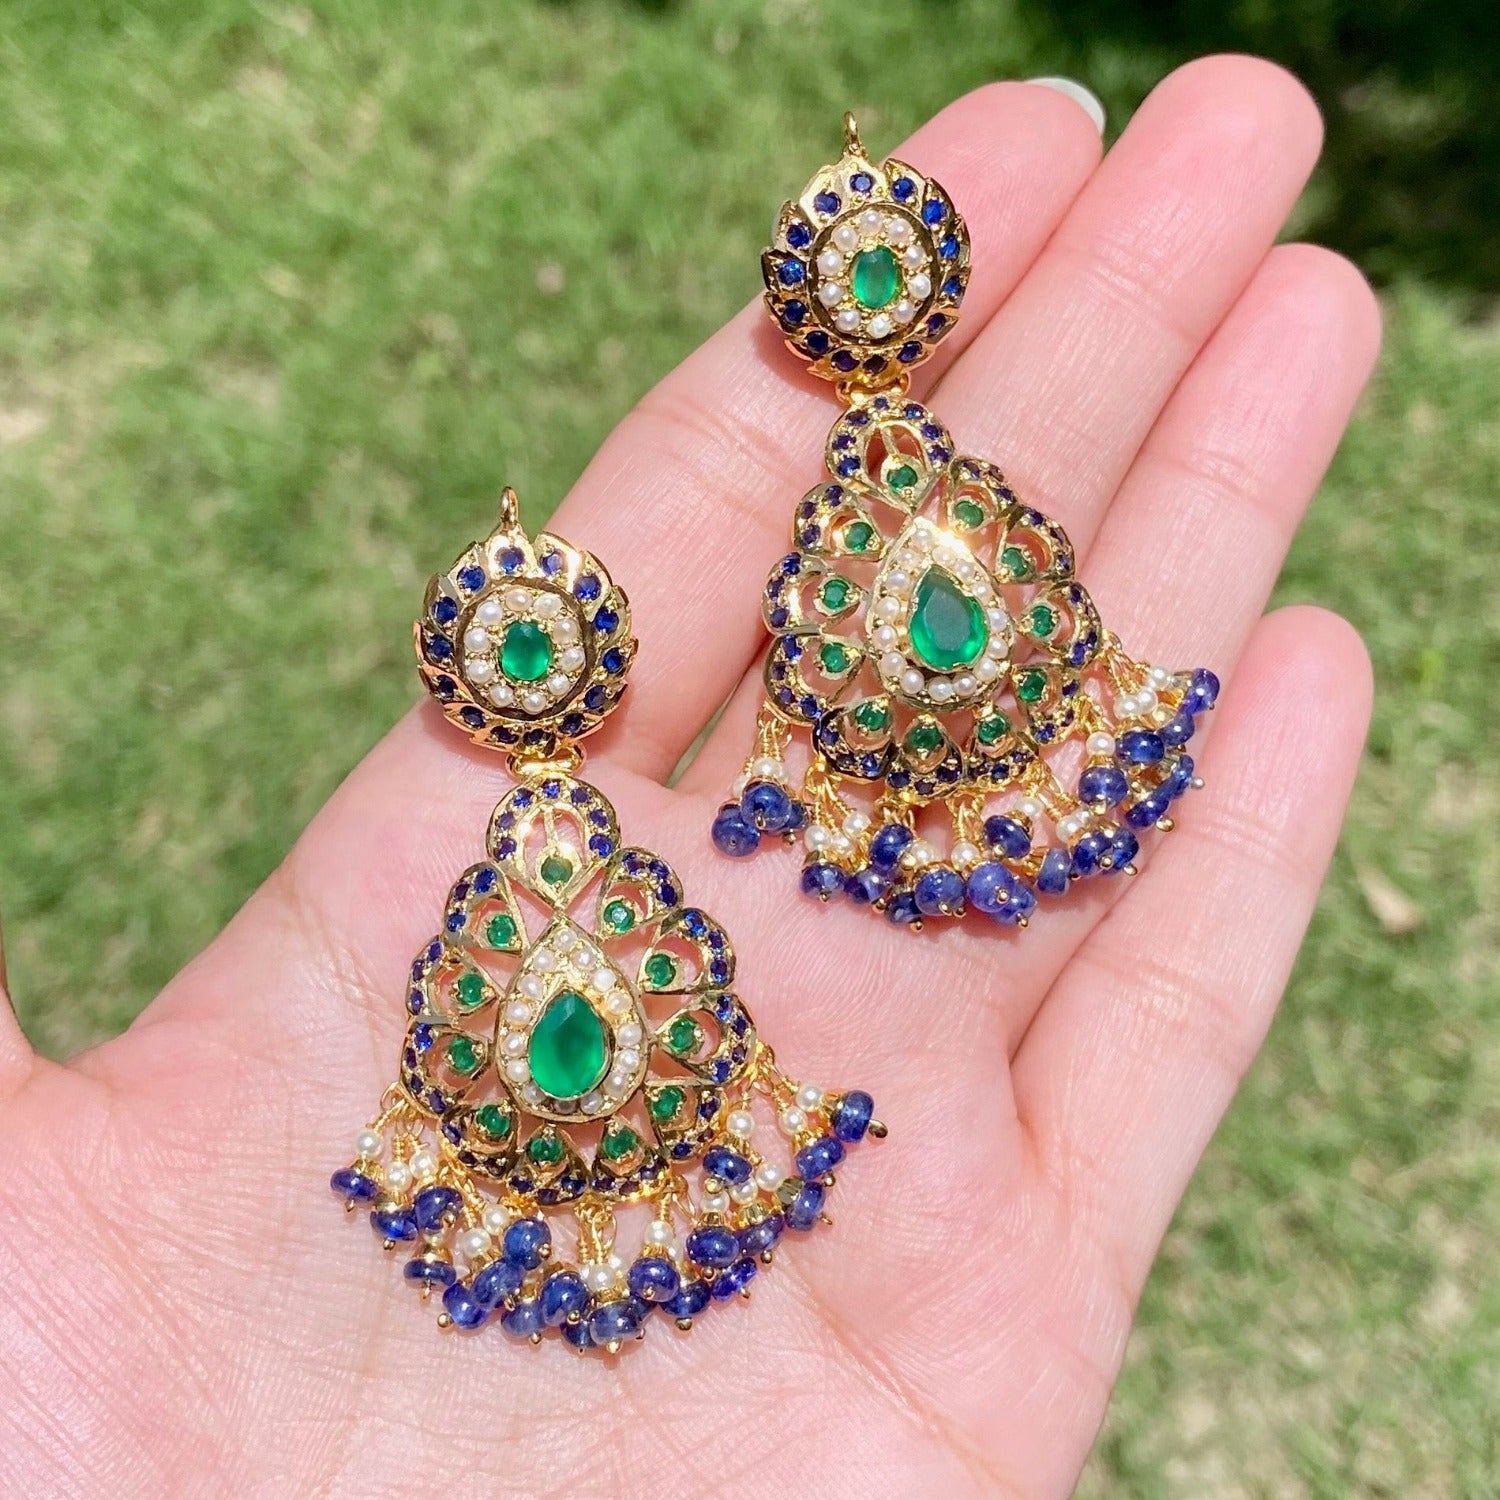 earrings that look exactly like 22k gold 